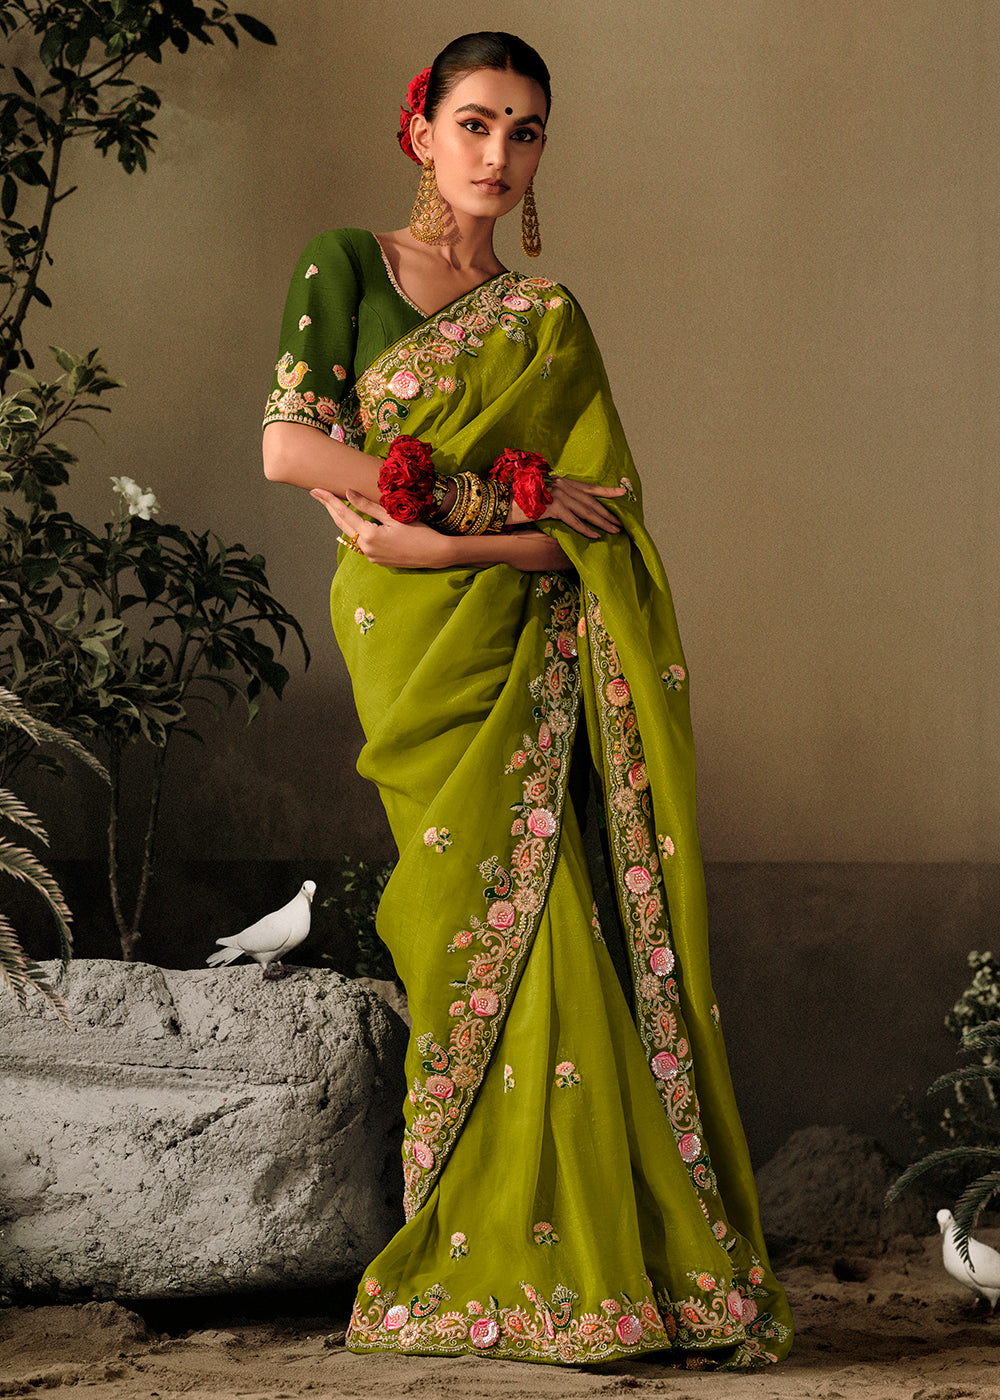 Buy Now Lime Green Khatli Work Embroidered Designer Wedding Saree Online in USA, UK, Canada & Worldwide at Empress Clothing. 